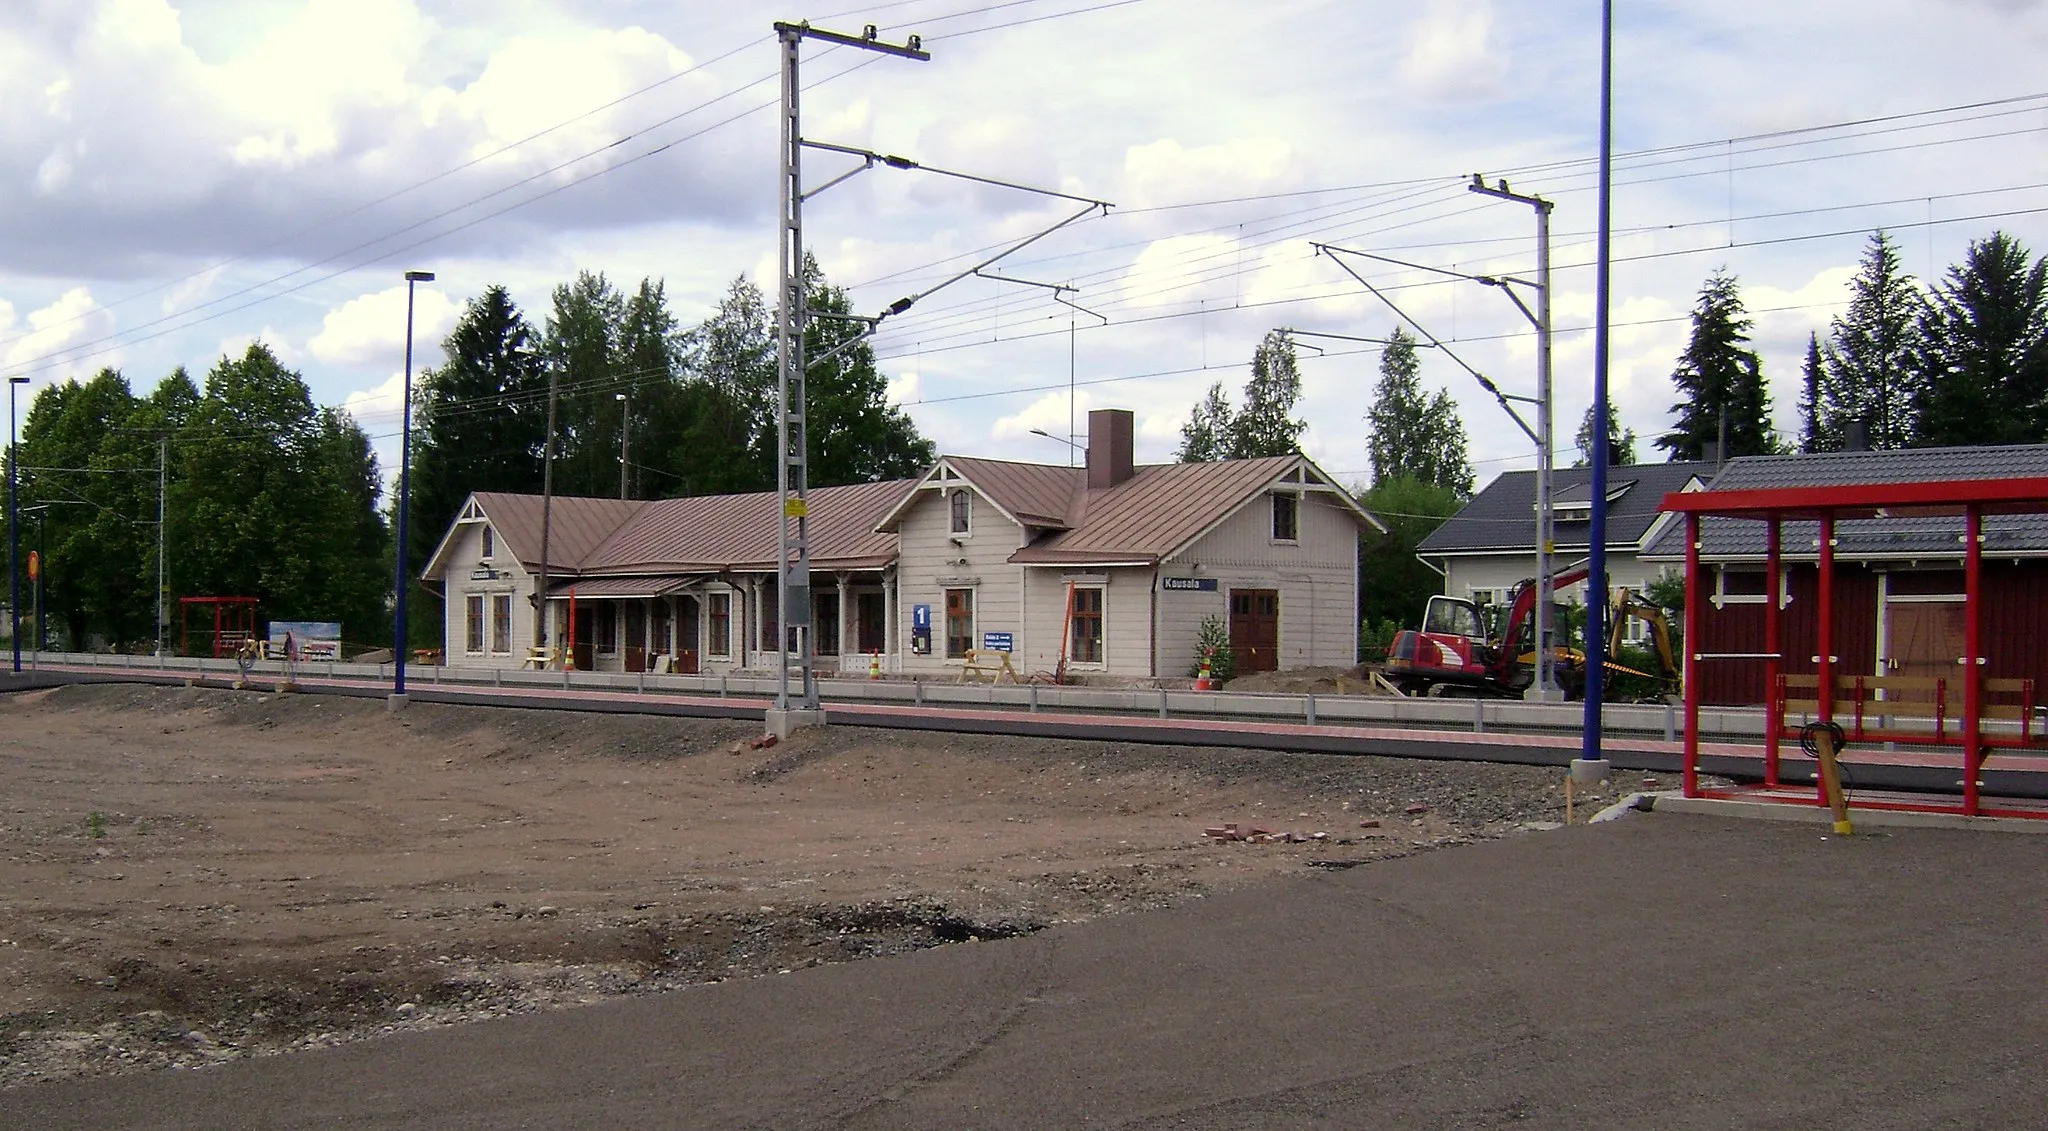 Photo showing: Kausala railway station, Iitti, Finland.